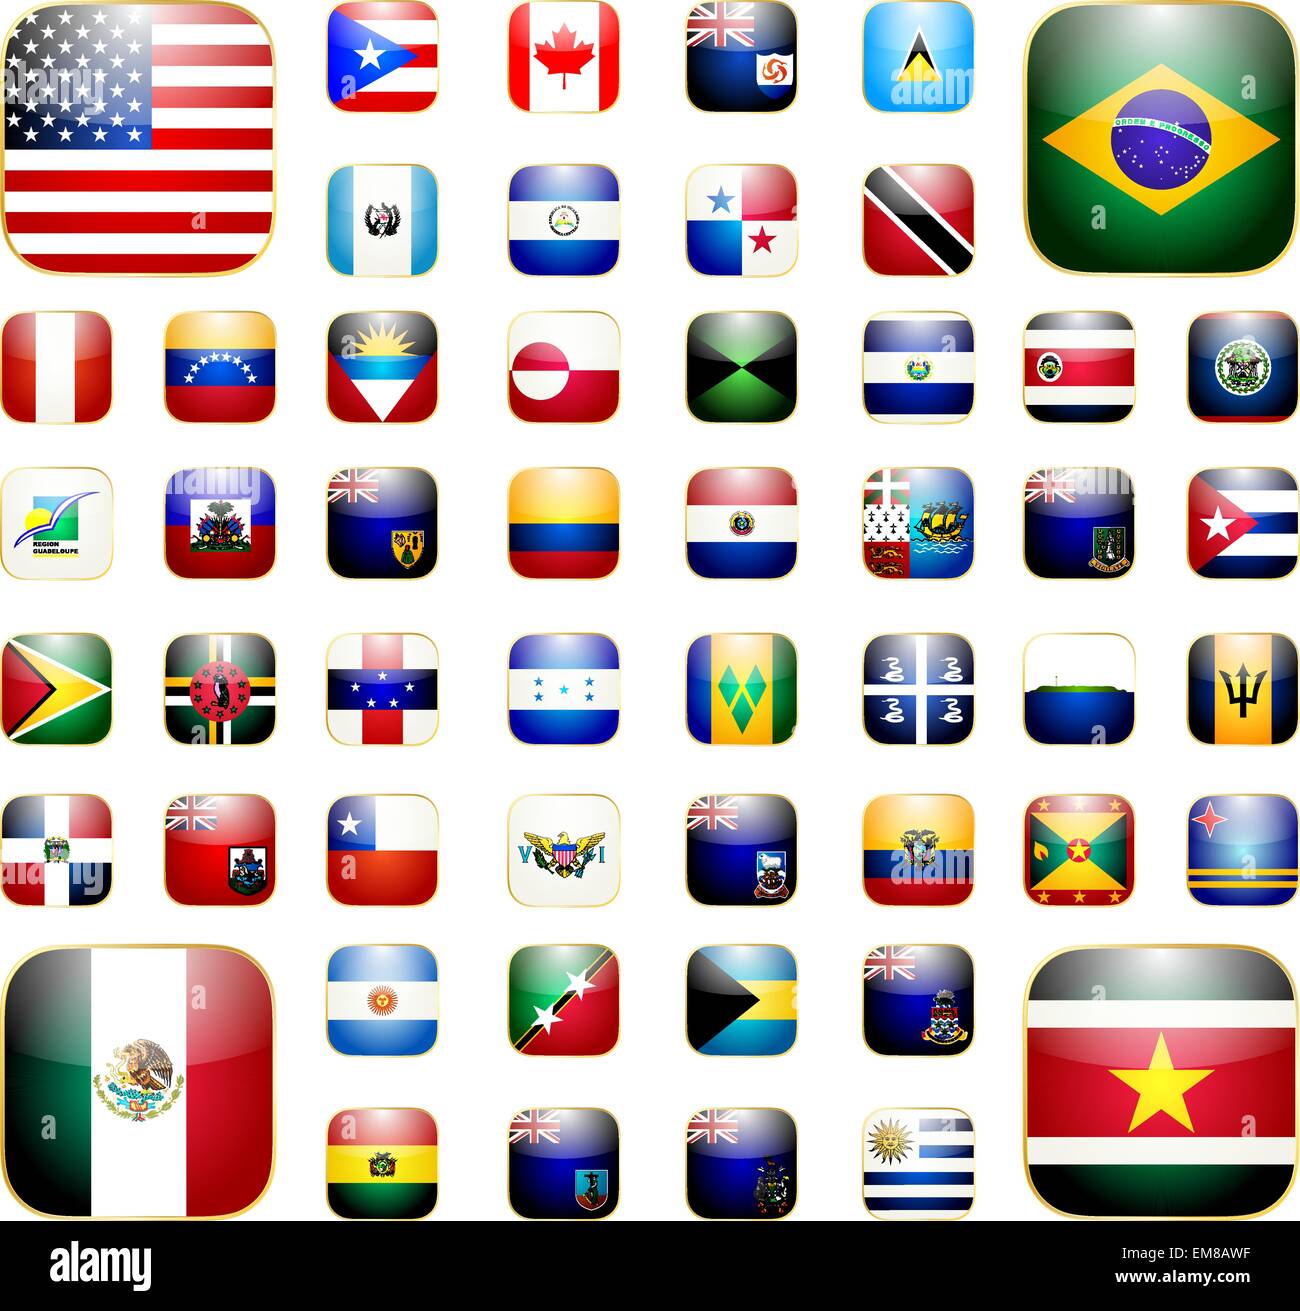 American continent app icon Stock Vector